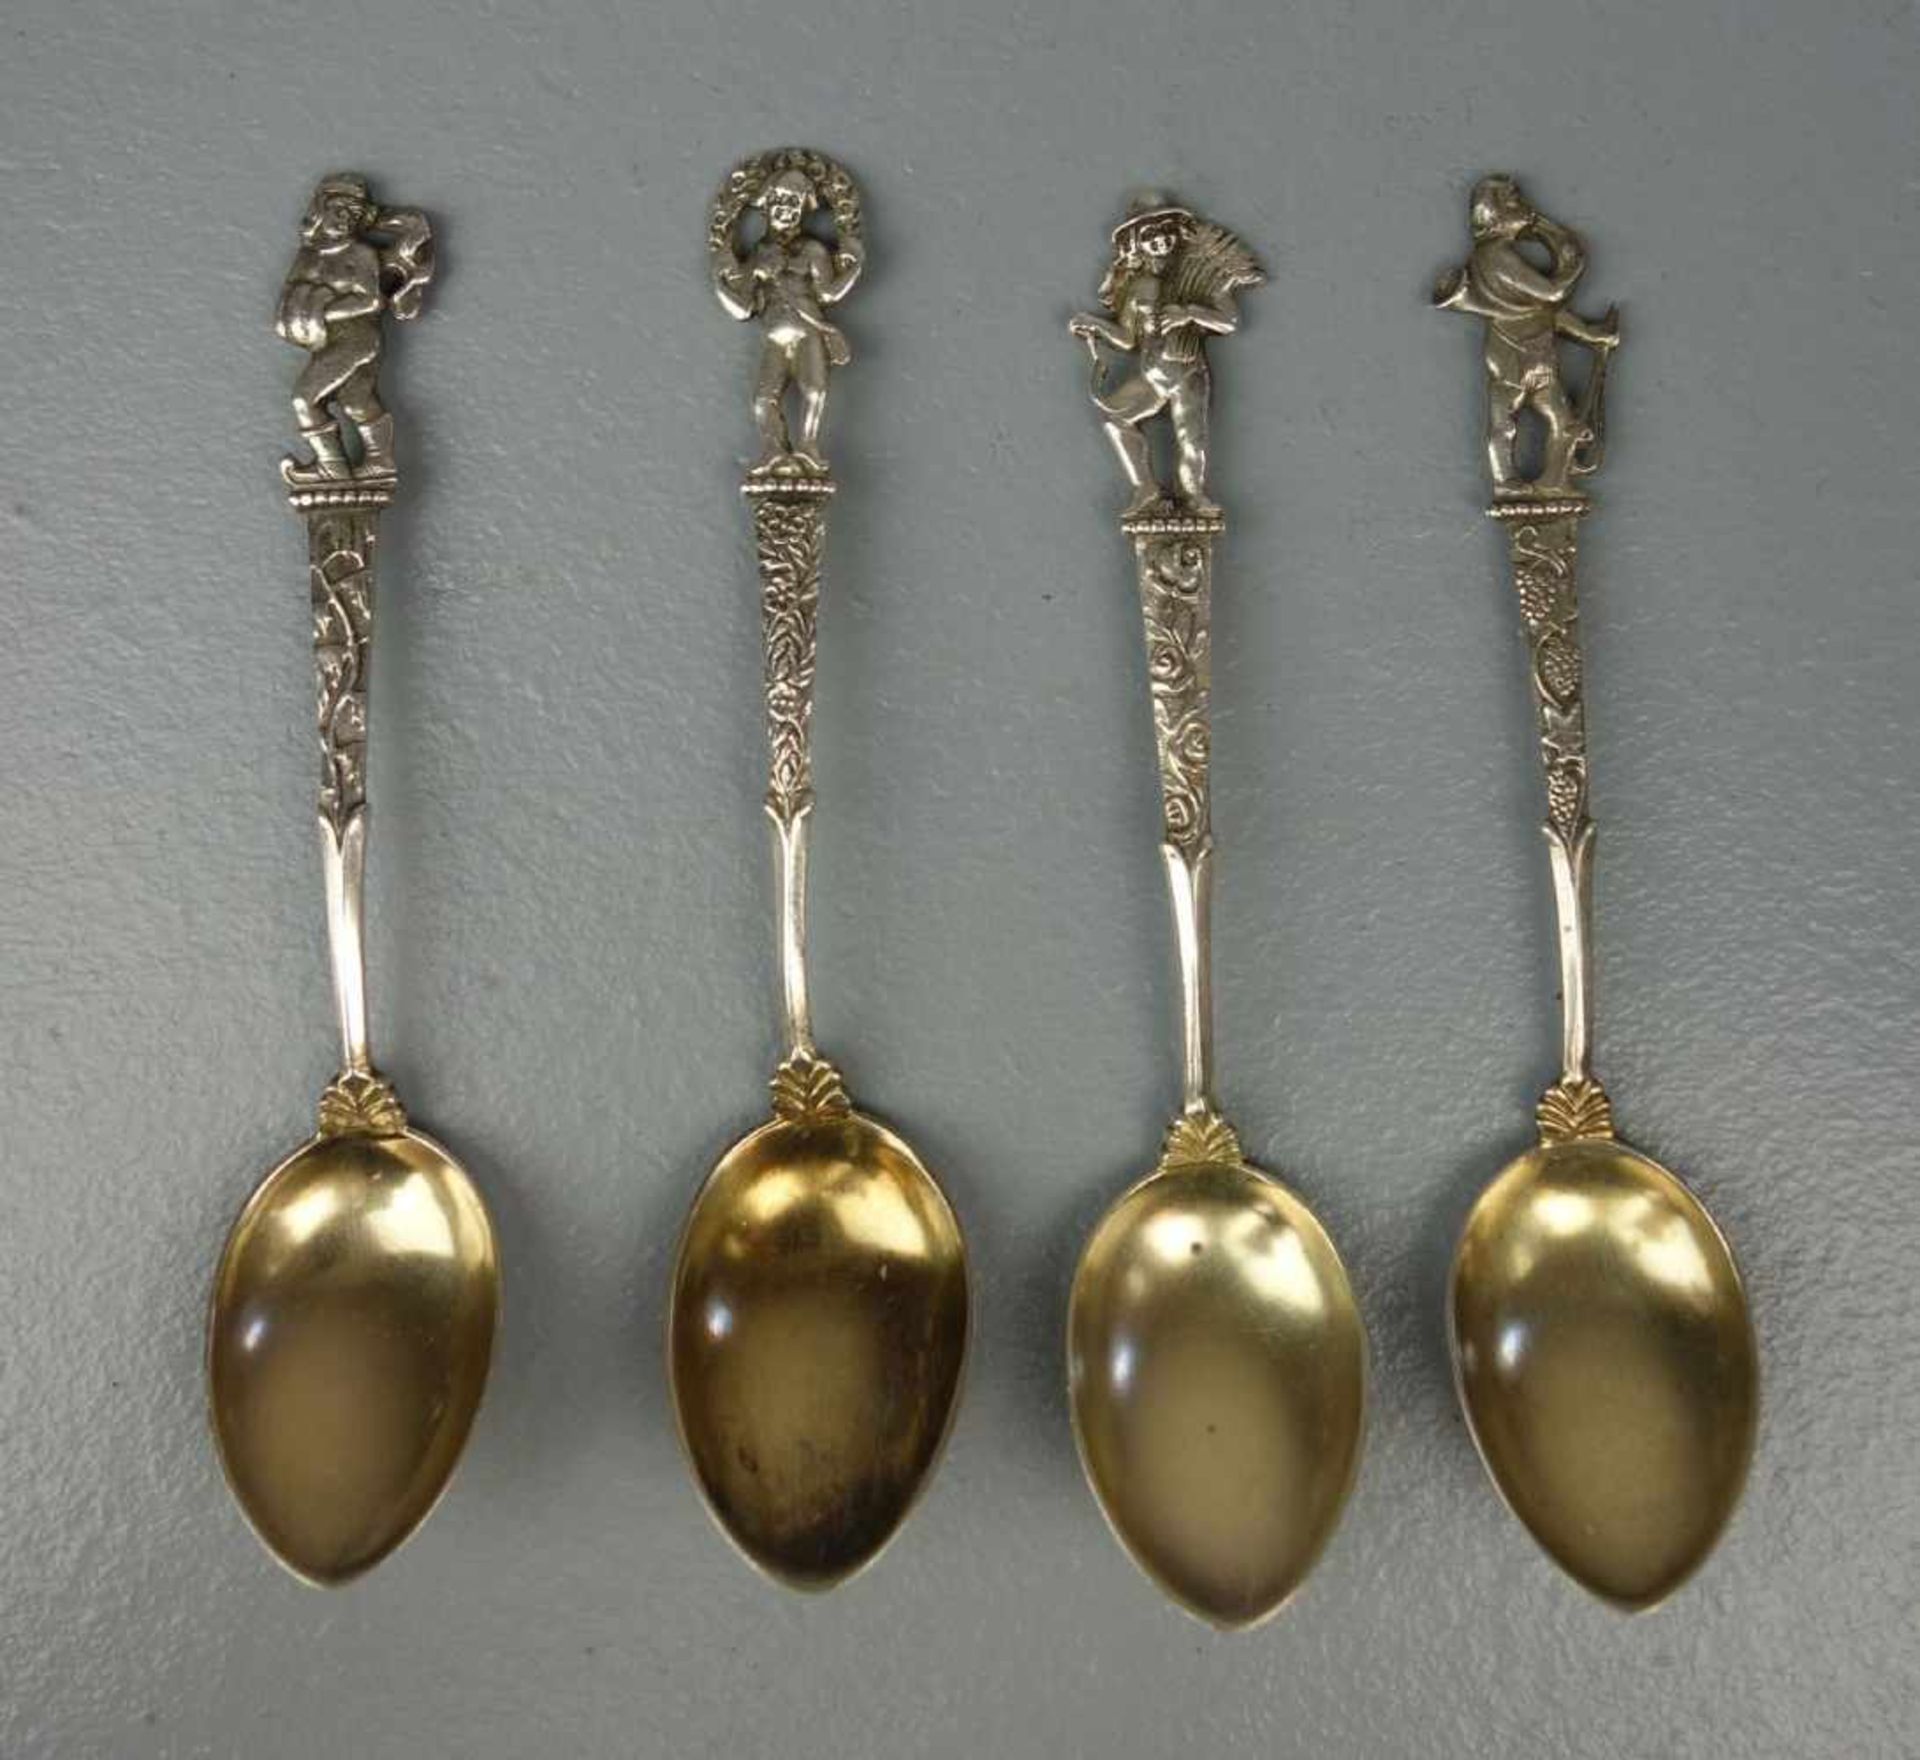 8 KLEINE LÖFFEL / MOKKALÖFFEL / mocha spoons, 20. Jh., Silber, Laffen partiell mit Restvergoldung. - Image 2 of 5